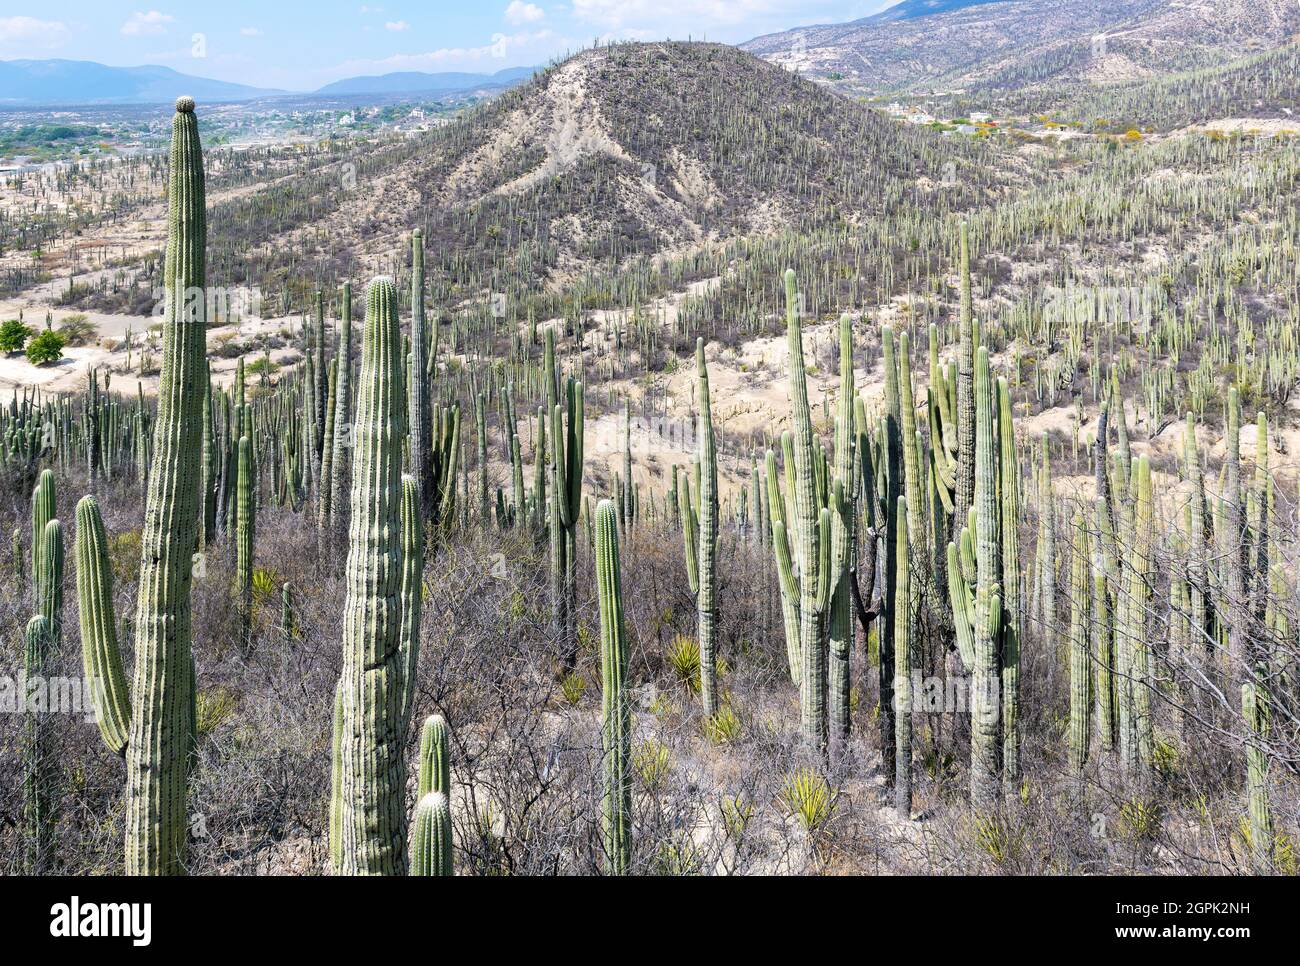 Landscap in the Tehuacan Cuicatlan Biosphere Reserve with columnar cactus (Ceroid cactus), Oaxaca, Mexico. Stock Photo